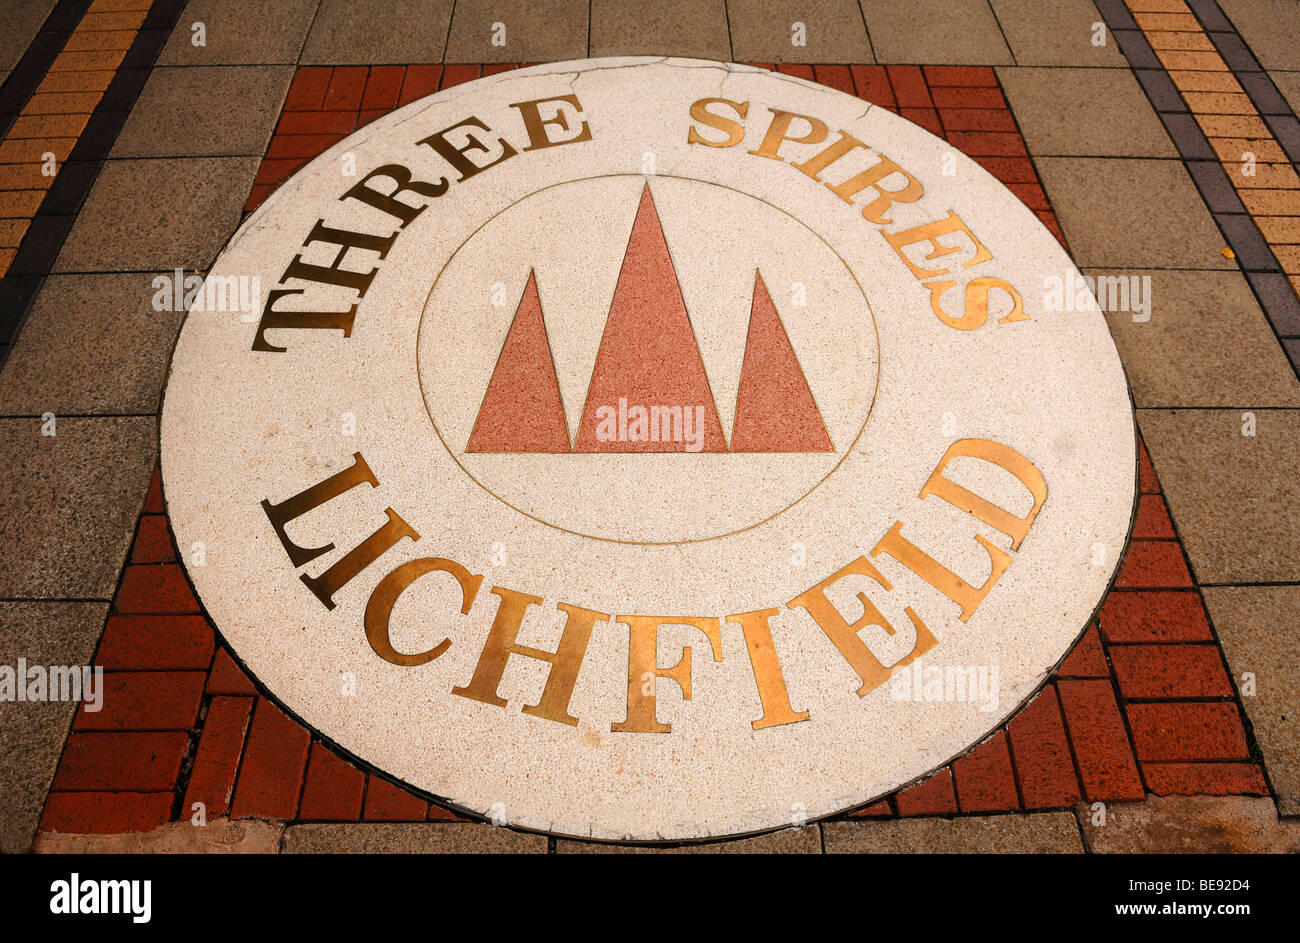 Large Lichfield logo on the ground in the pedestrian zone, Gresley Row, Staffordshire, Lichfield, England, UK, Europe Stock Photo